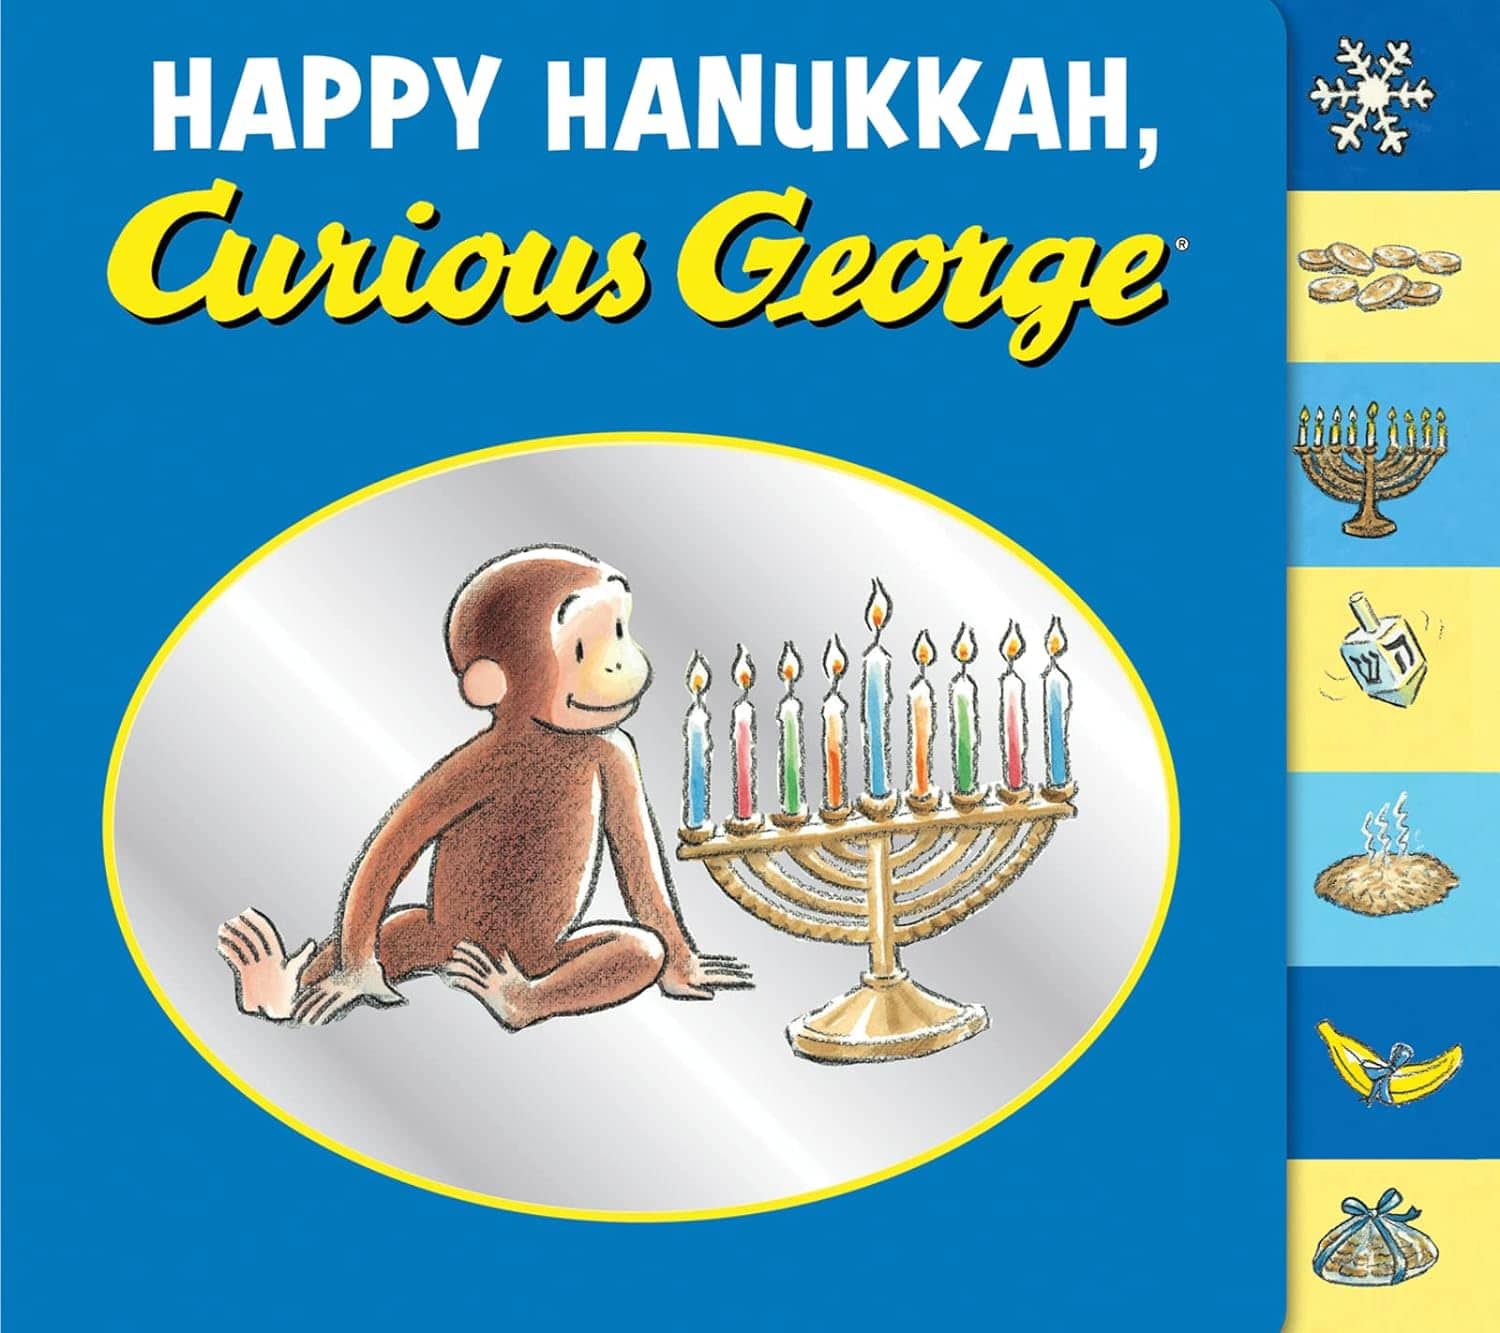 "Happy Hanukkah, Curious George" by H. A. Rey